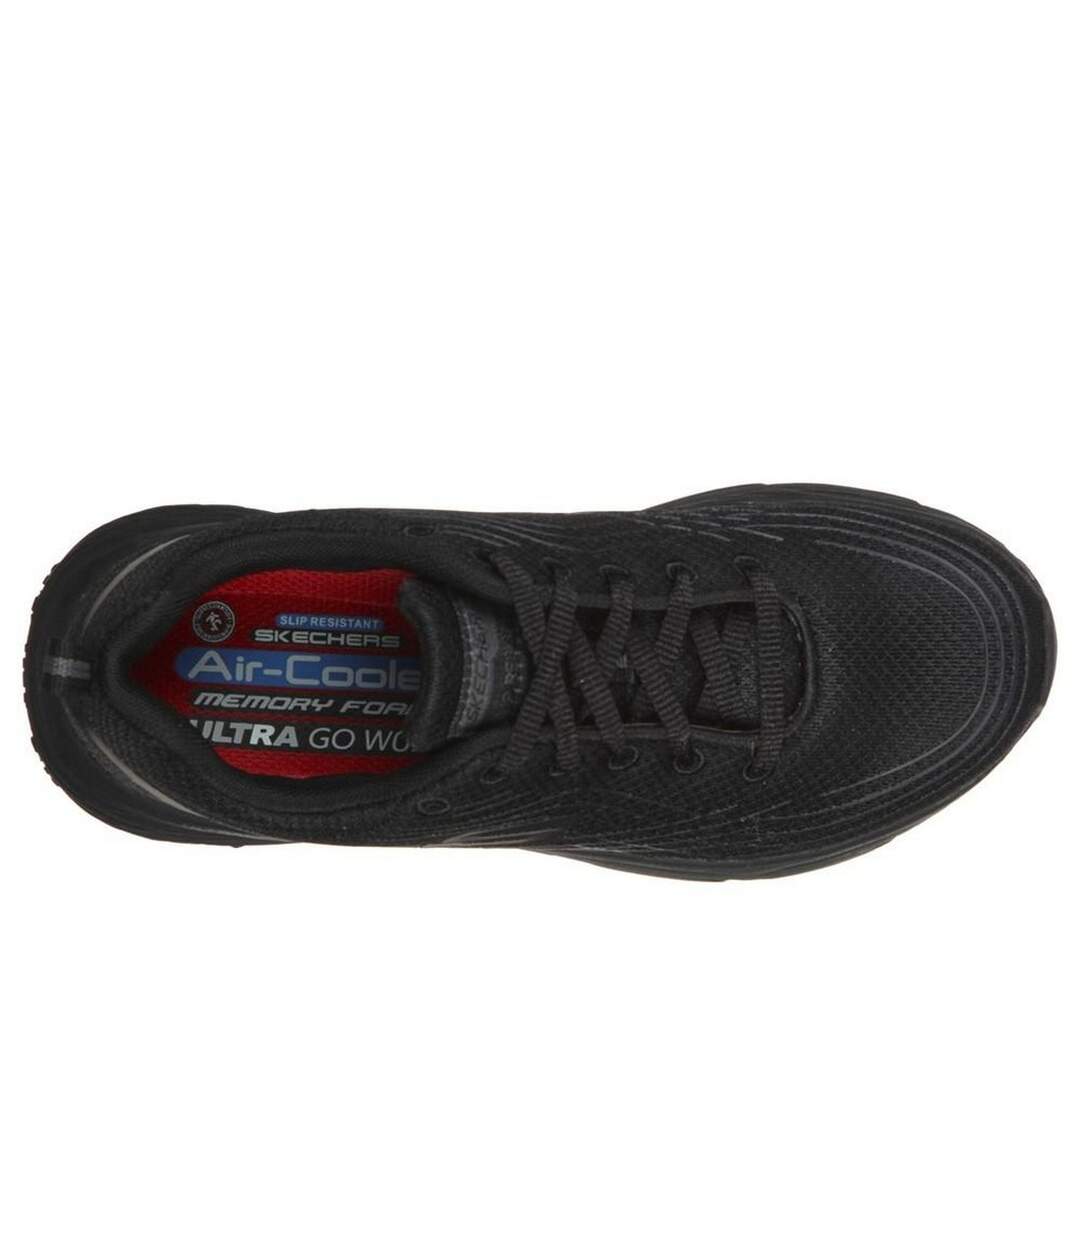 Skechers Womens/Ladies Max Cushioning Elite Sr Safety Shoes (Black) - UTFS7948